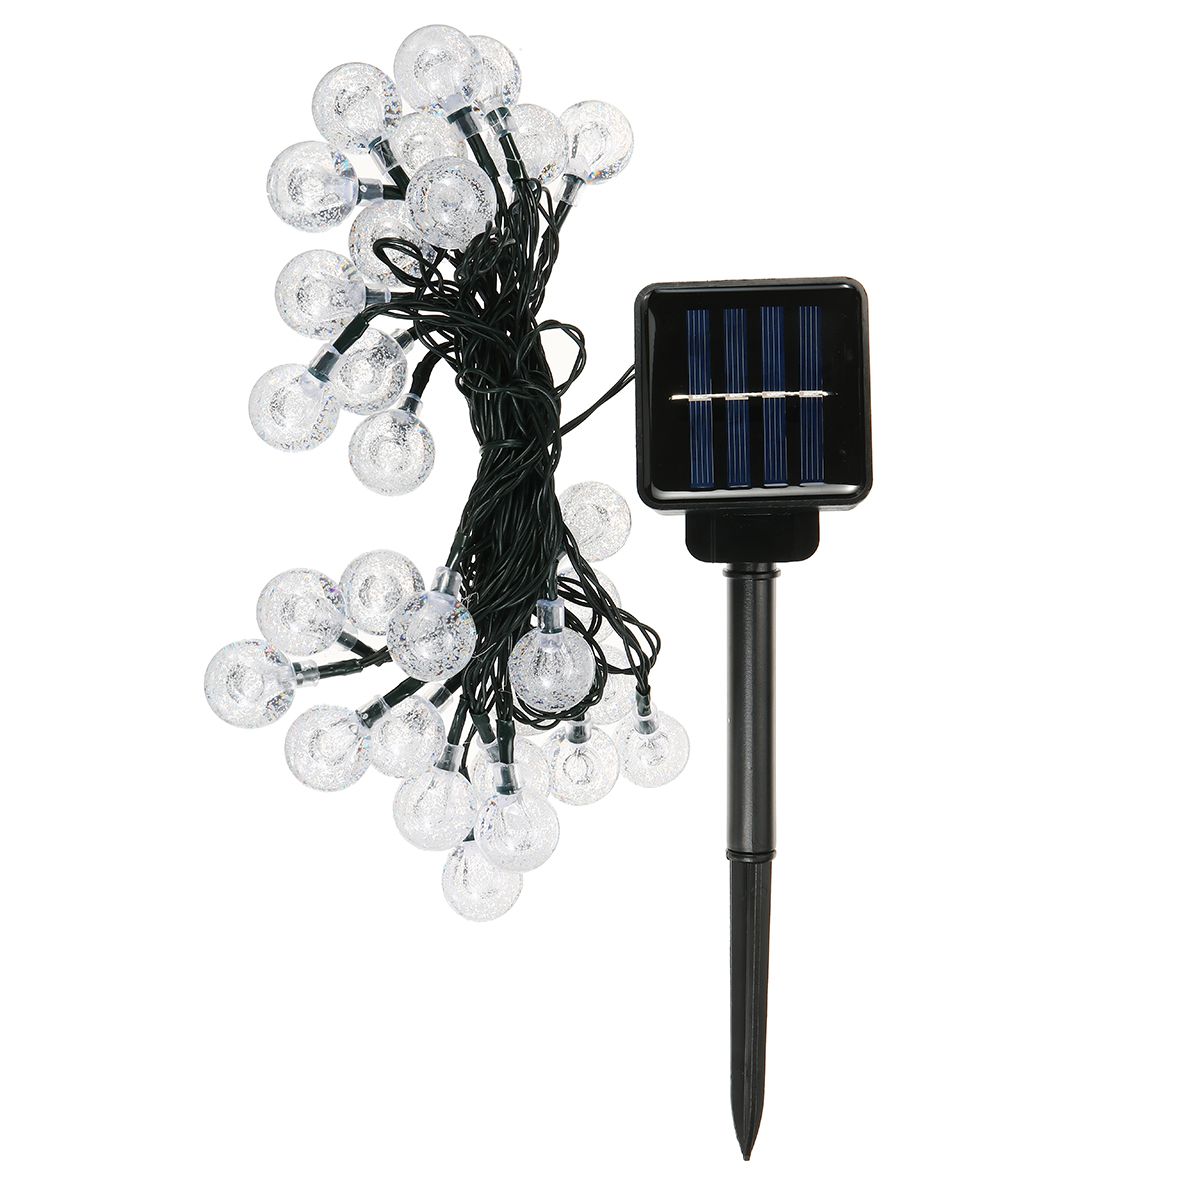 65m-Solar-Powered-30-LEDs-String-Light-Garden-Paths-Yard-Decor-Lamp-Outdoor-Waterproof-1719913